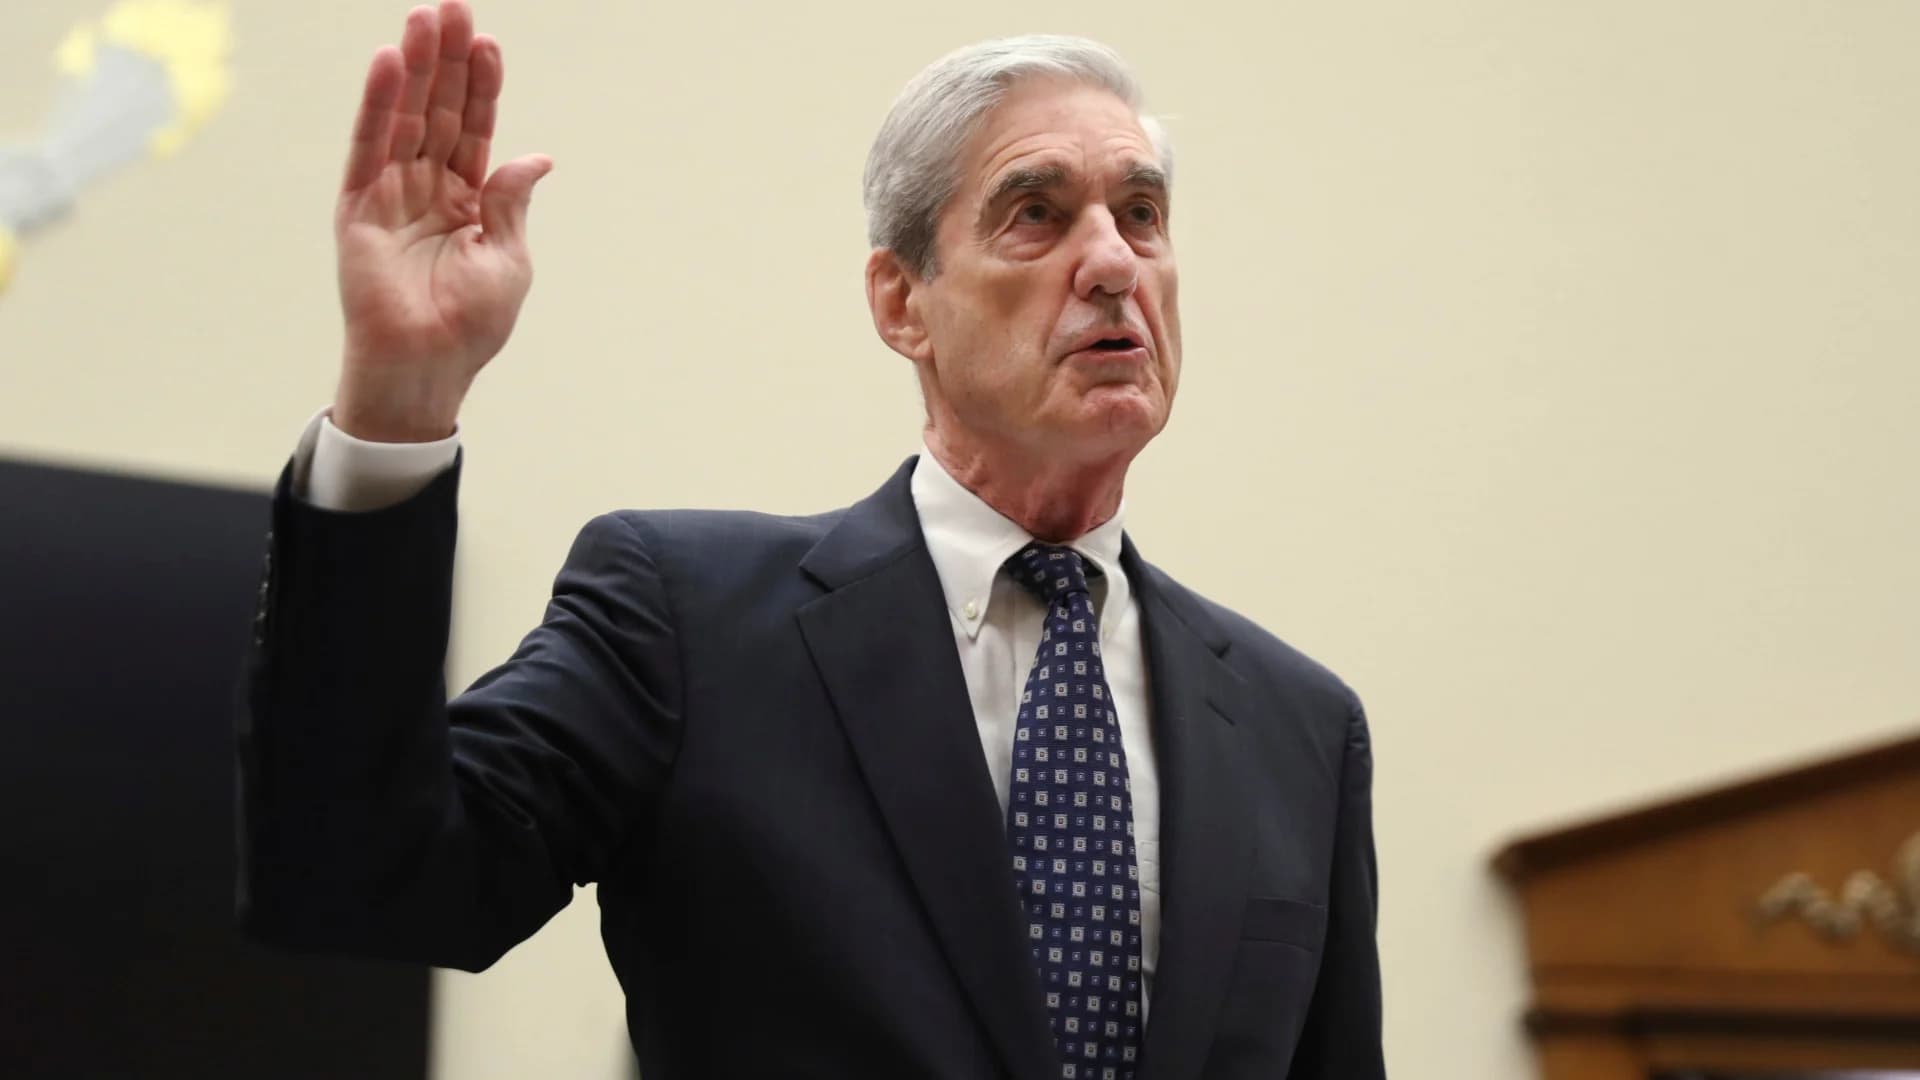 Robert Mueller testifies before Congress on Russia investigation